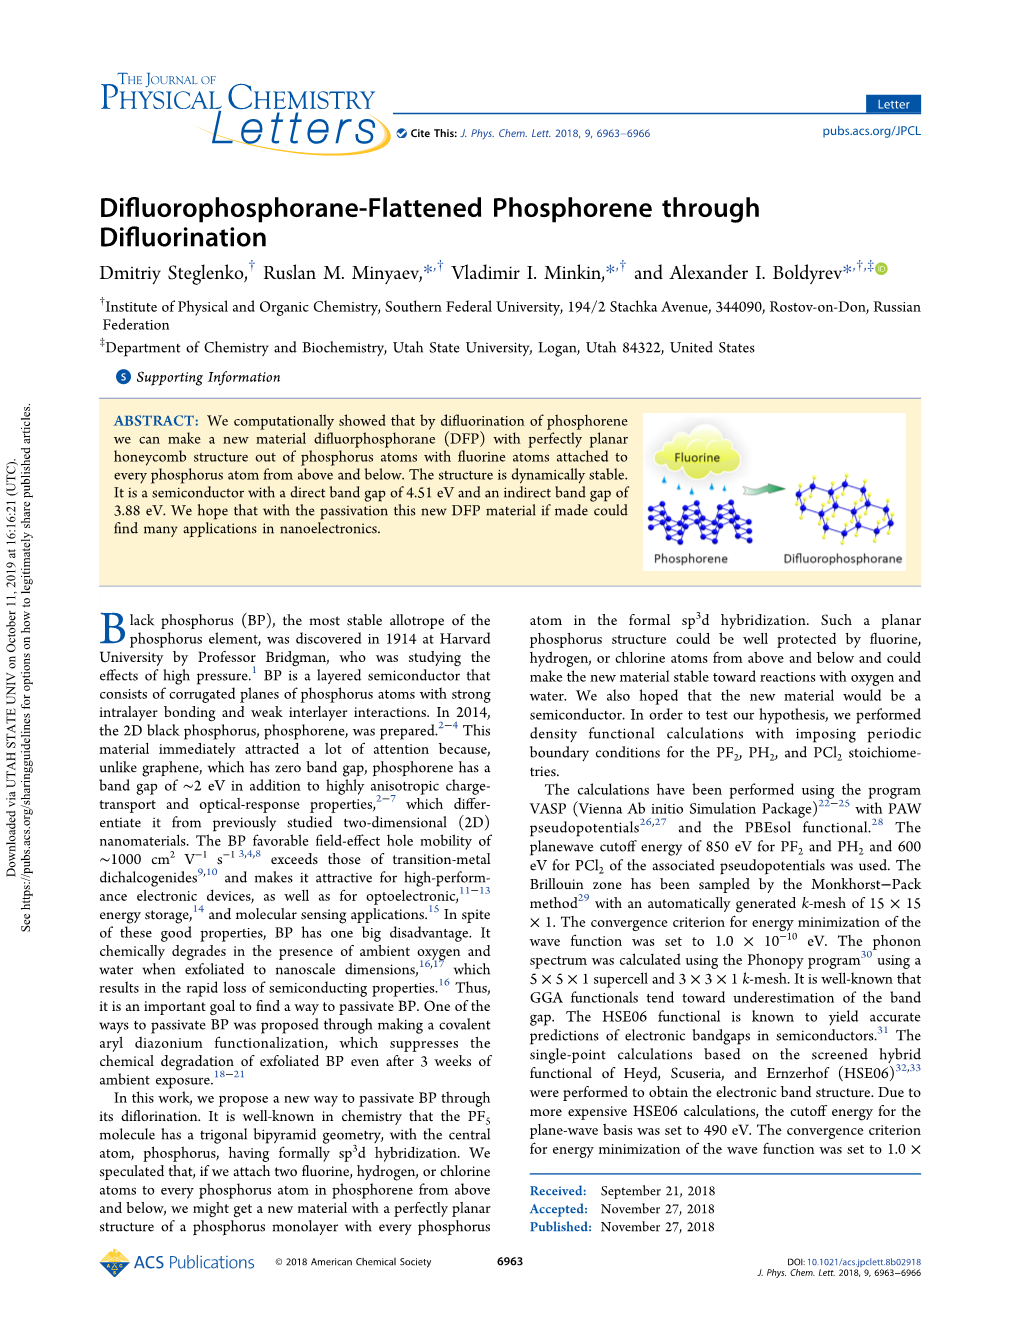 Difluorophophorane-Flattened Phosphorene Through Difluorination